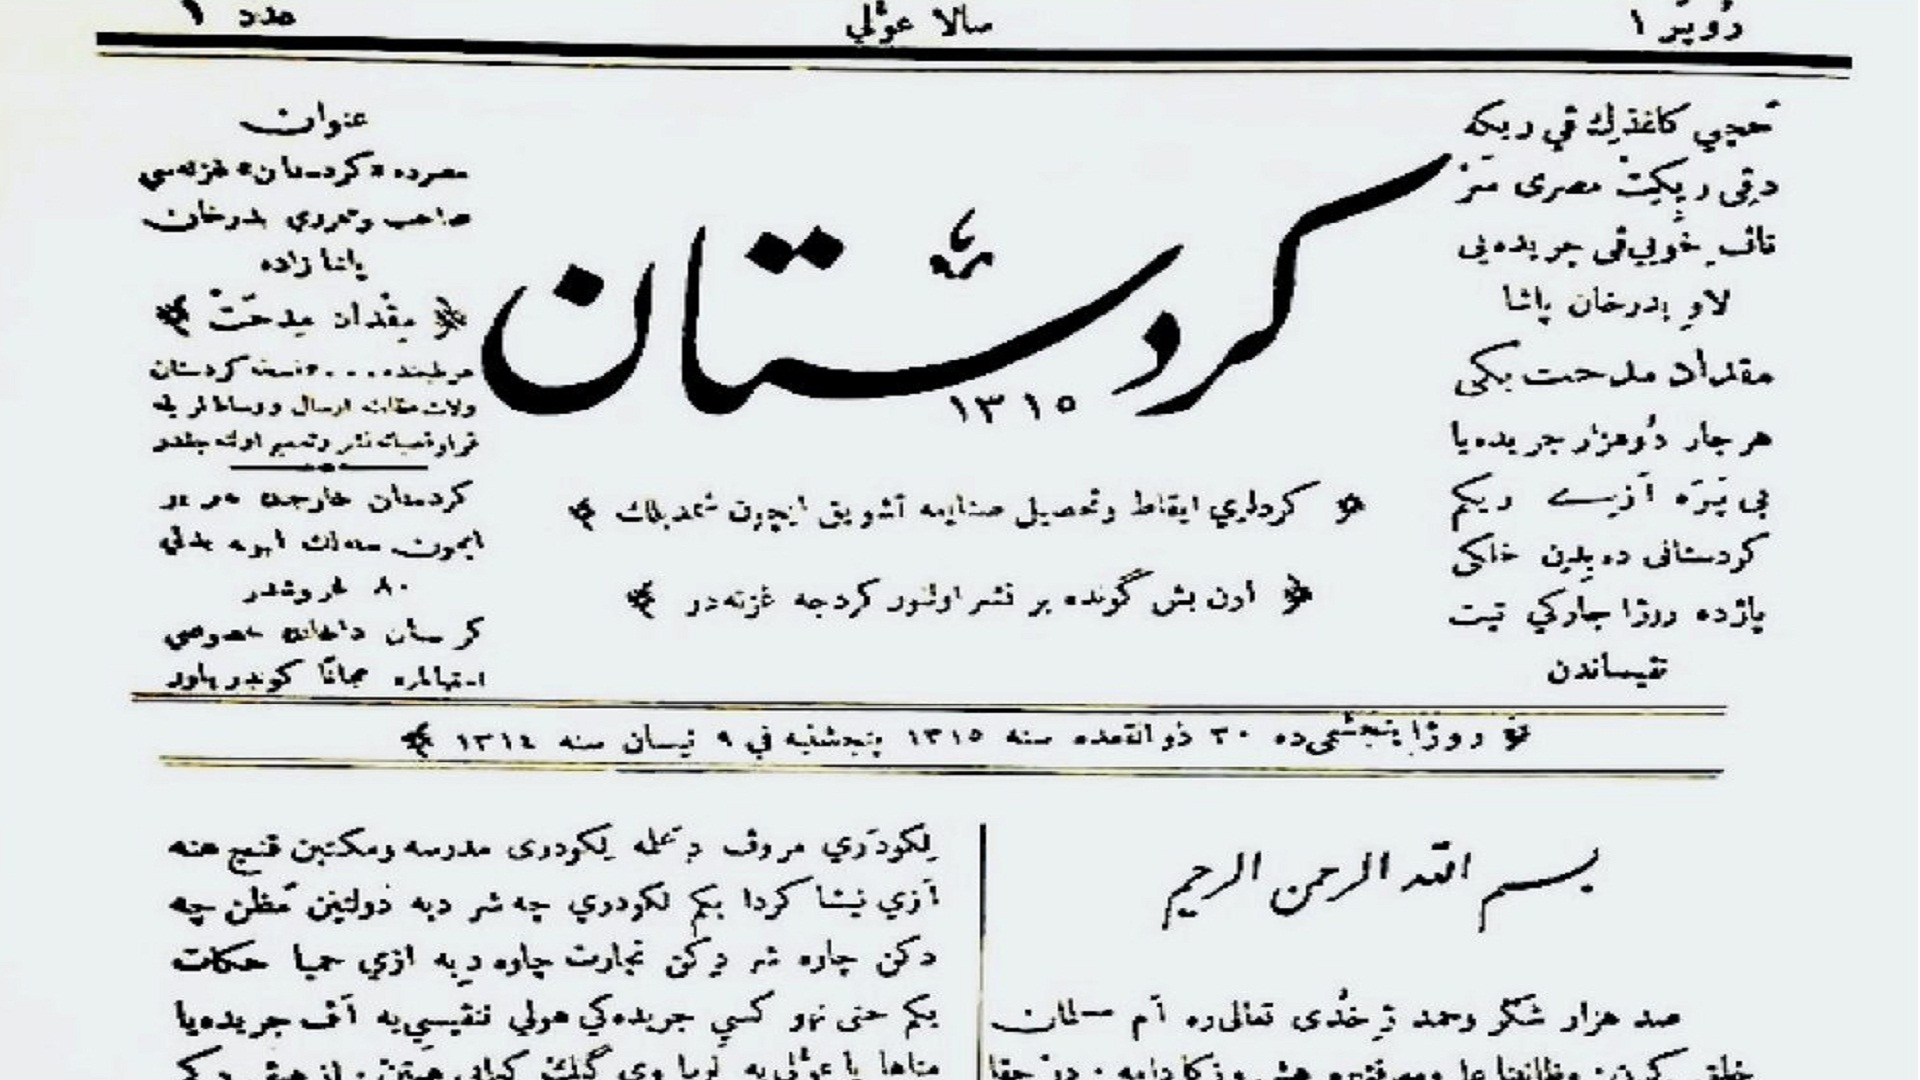  The first issue of Kurdistan Newspaper.